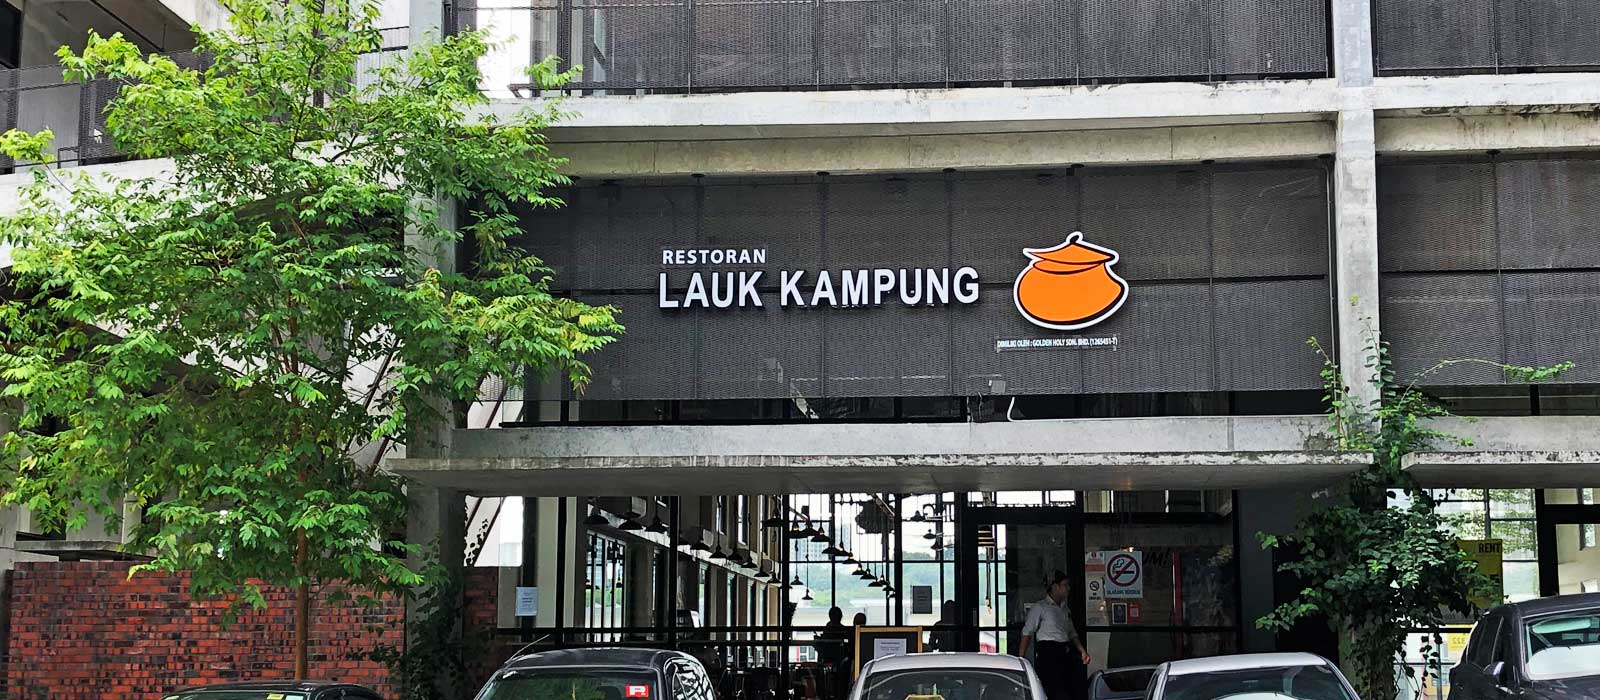 Restaurant Lauk Kampung